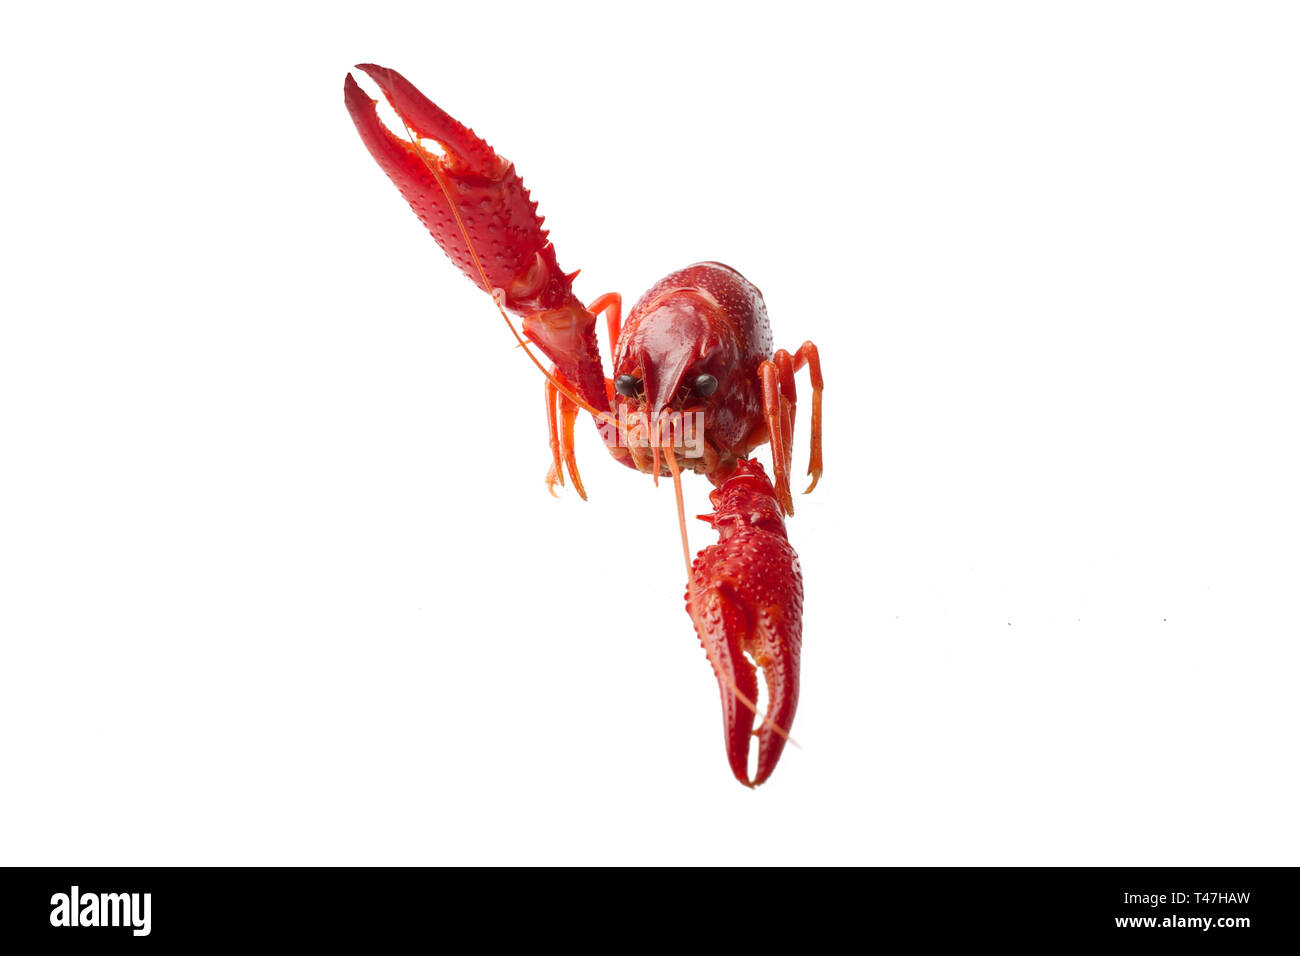 Boiled red crawfish isolated on white background Stock Photo